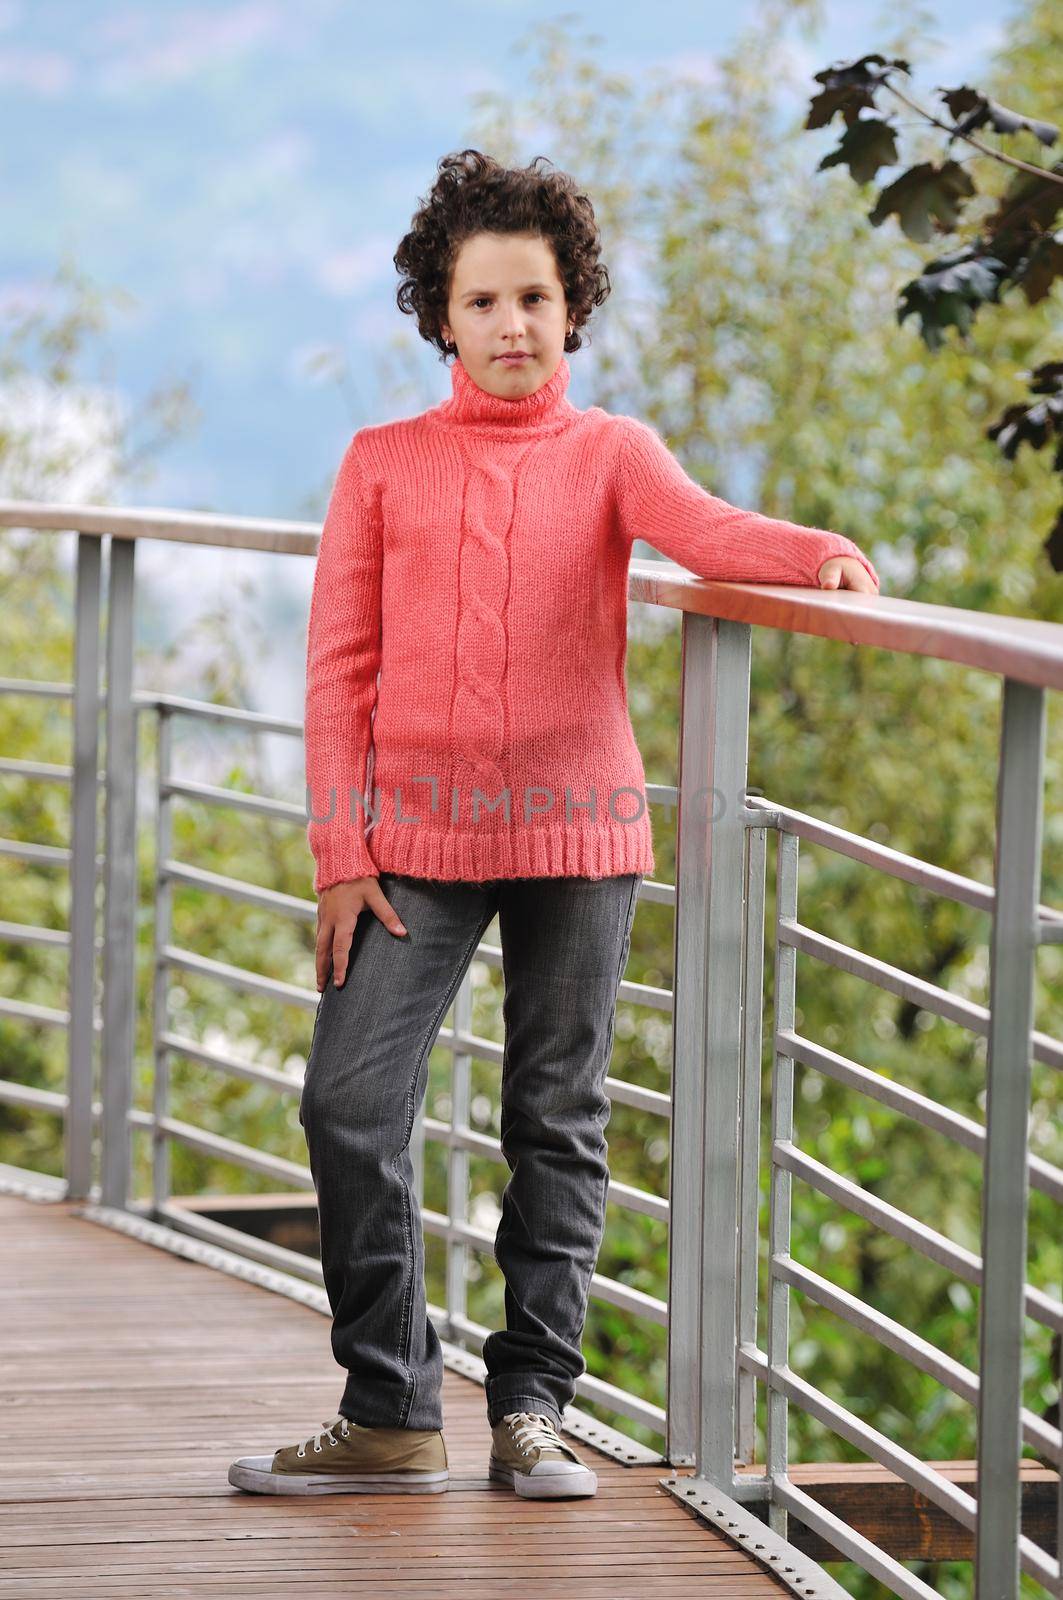 child fashion outdoor by dotshock